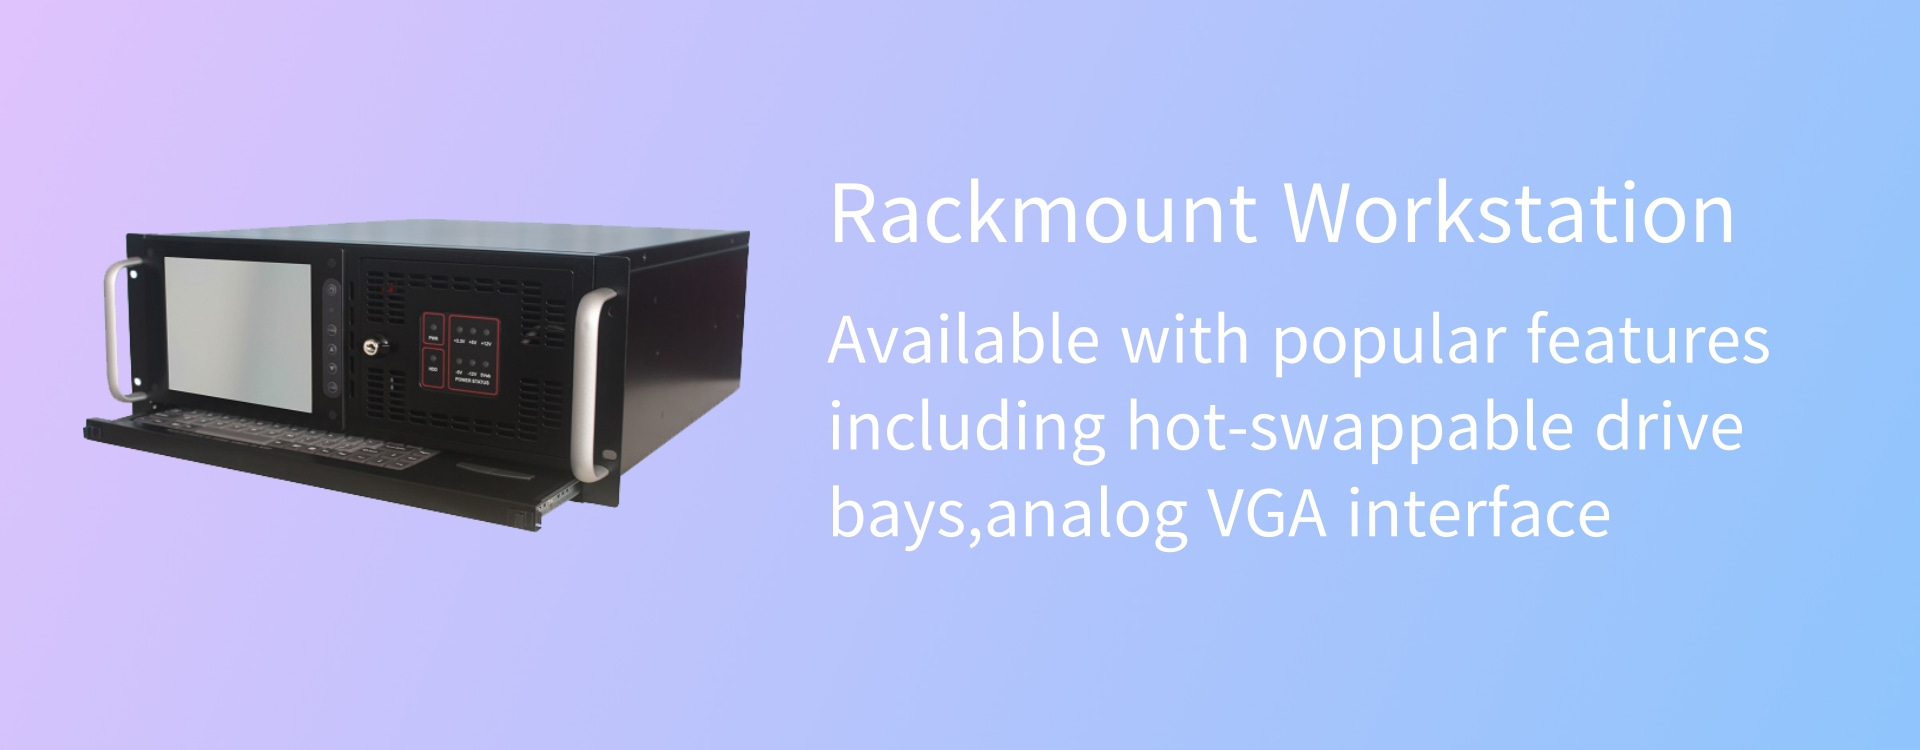 Rackmount Workstation